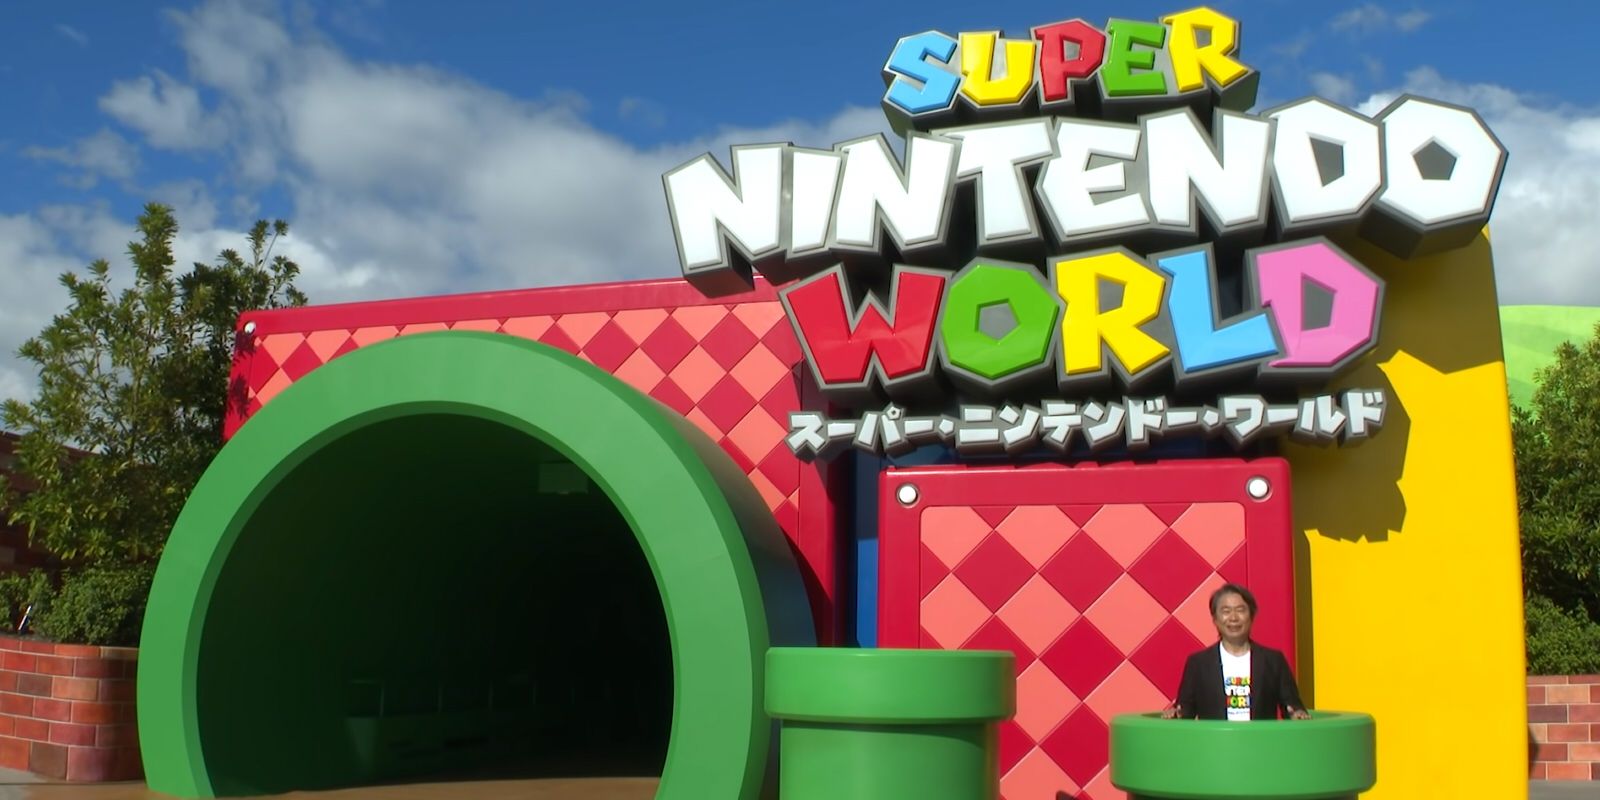 The entrance to Super Nintendo World 